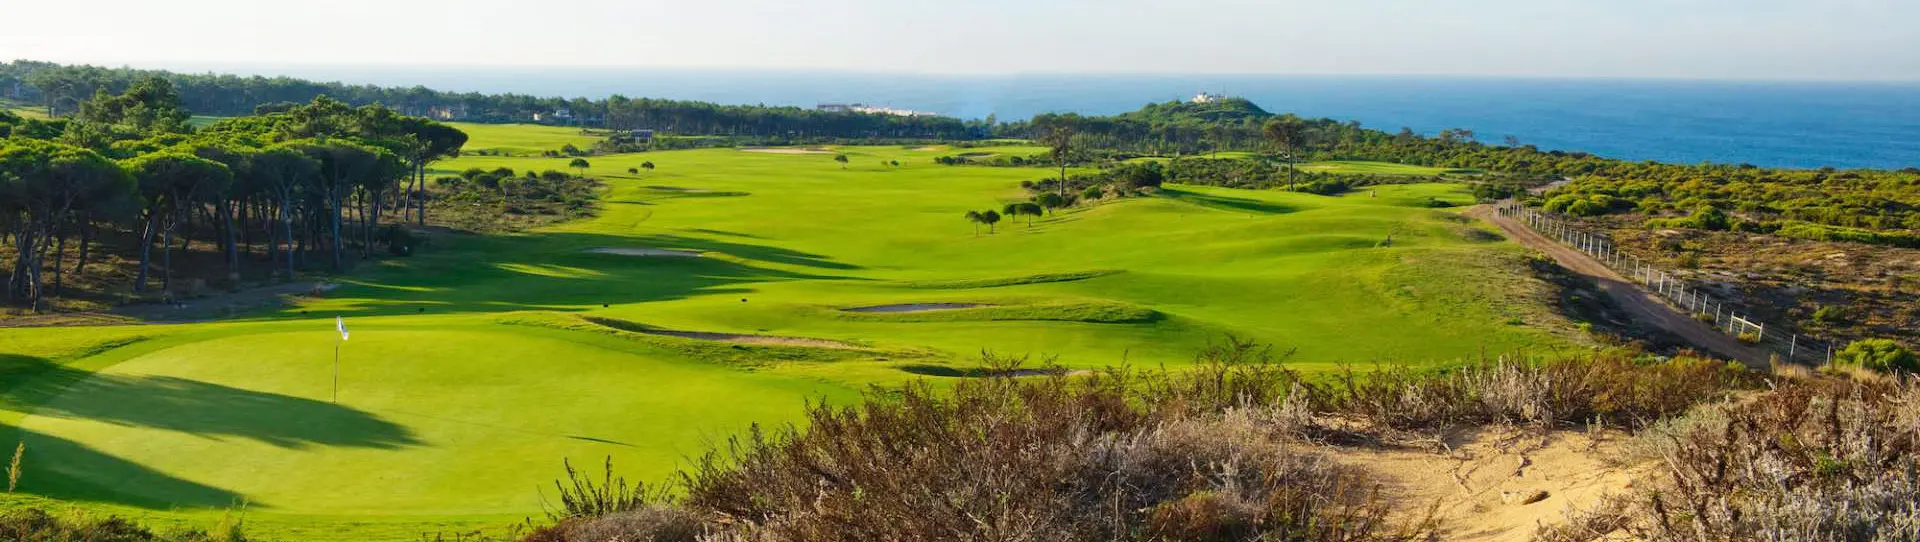 Portugal Golf Driving Range - Oitavos Dunes Driving Range - Photo 2